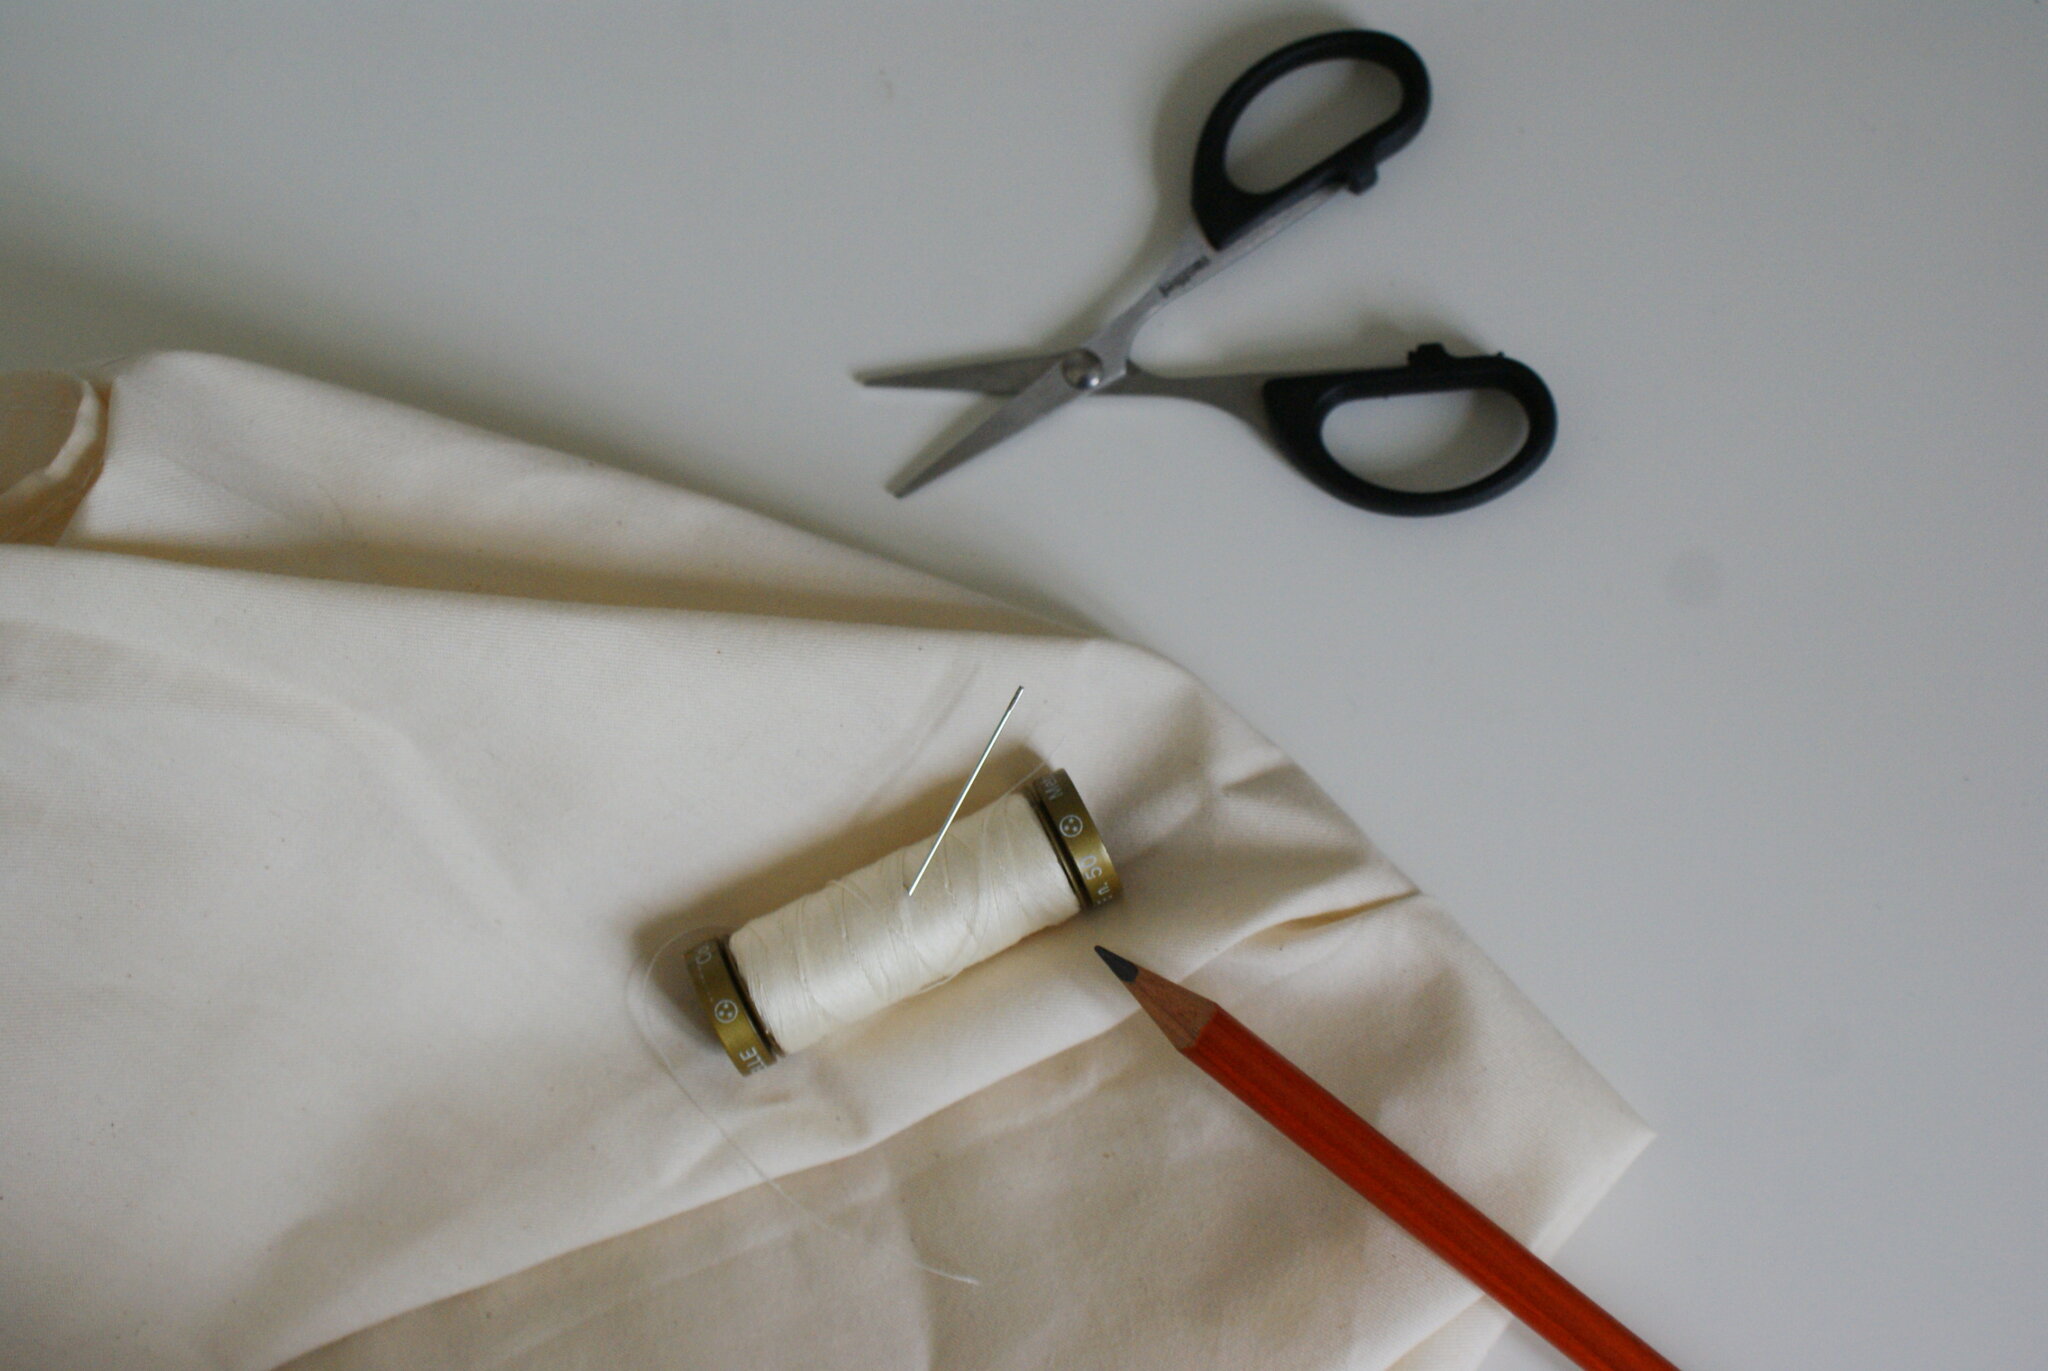 diy bunny ear bow knot hair ties scrunchies tutorial how make home sewing easy handmade 